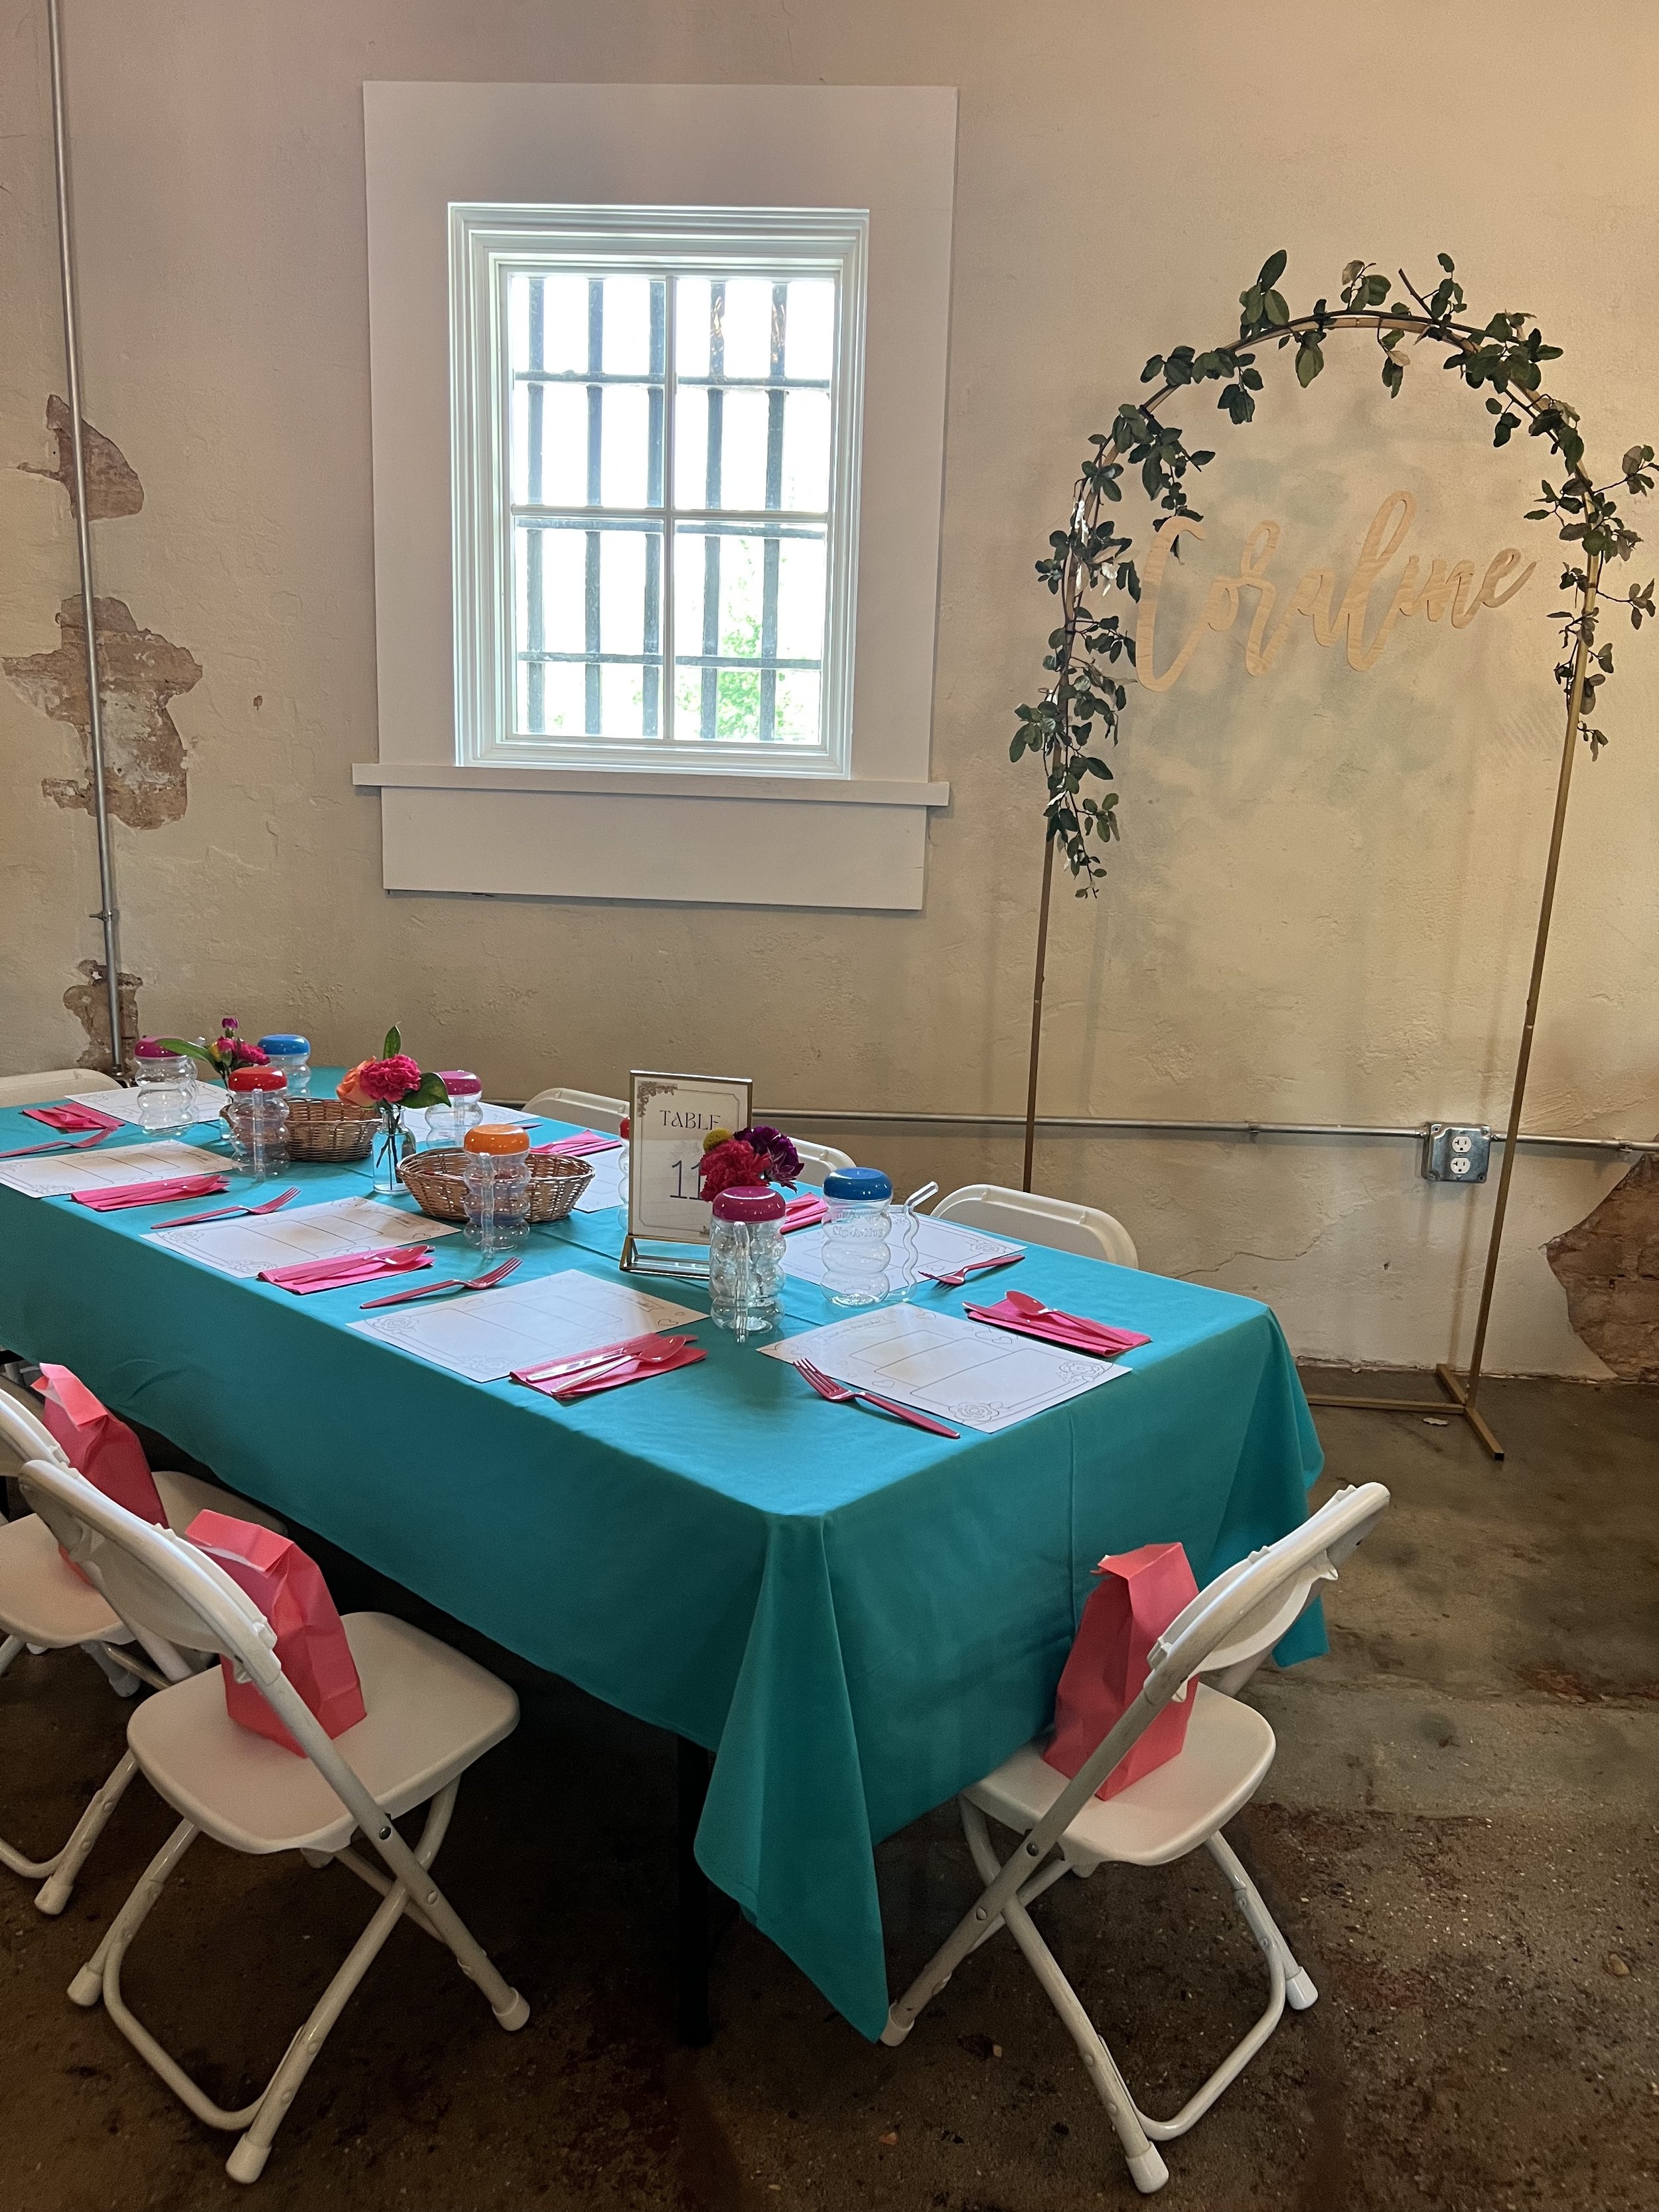 The Historic Dallas Jail  Gaston County Event Venue Wedding Kids Table .jpg